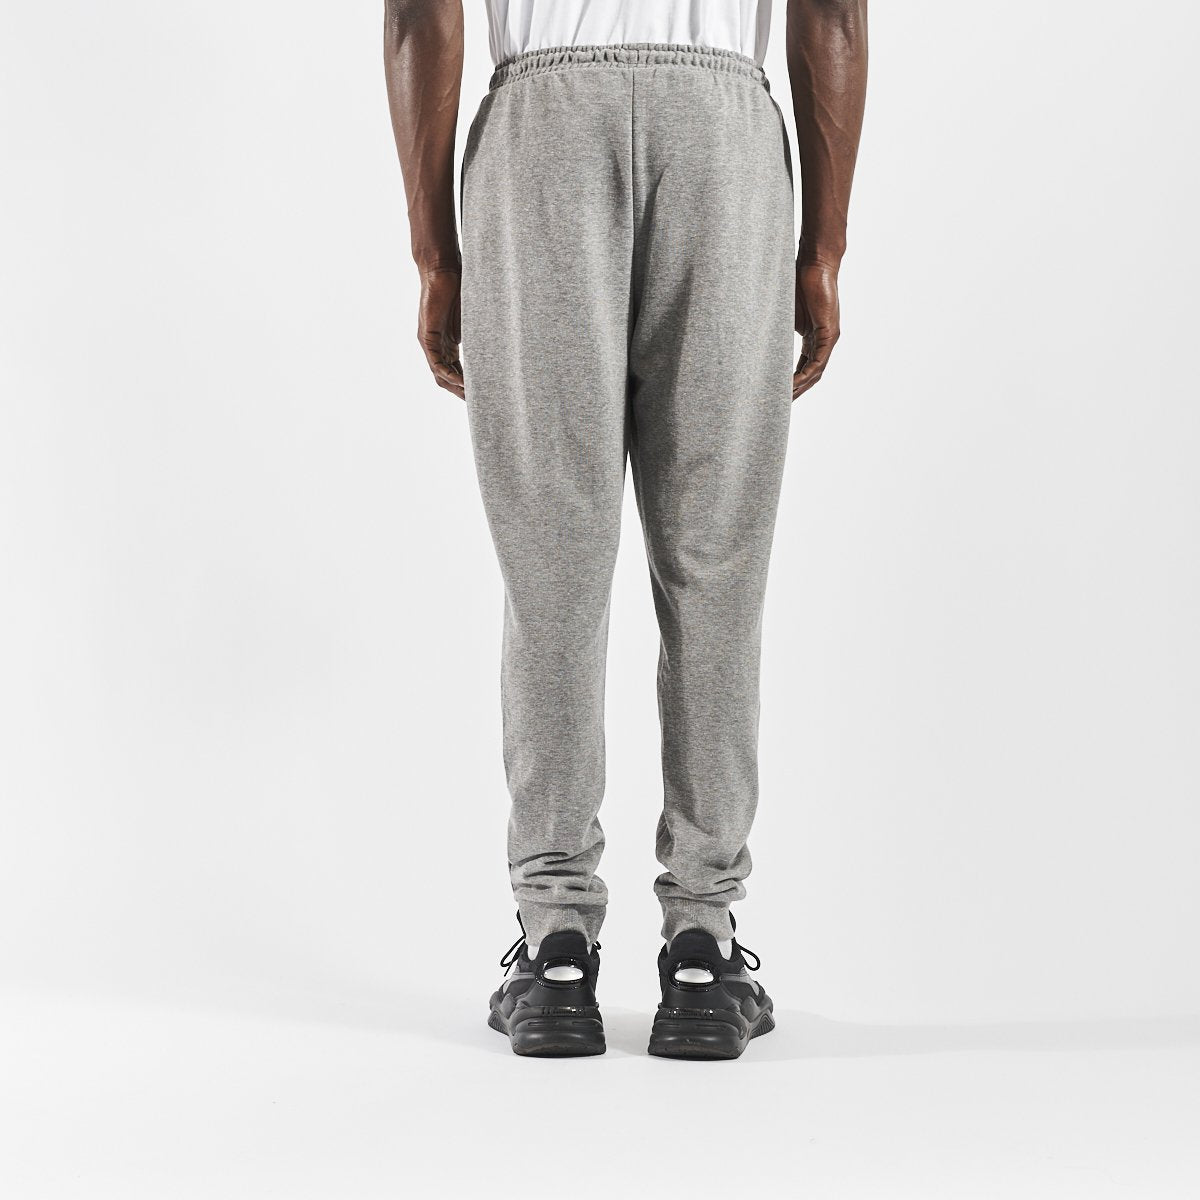 Pantalon Keldy hombre gris - Imagen 2